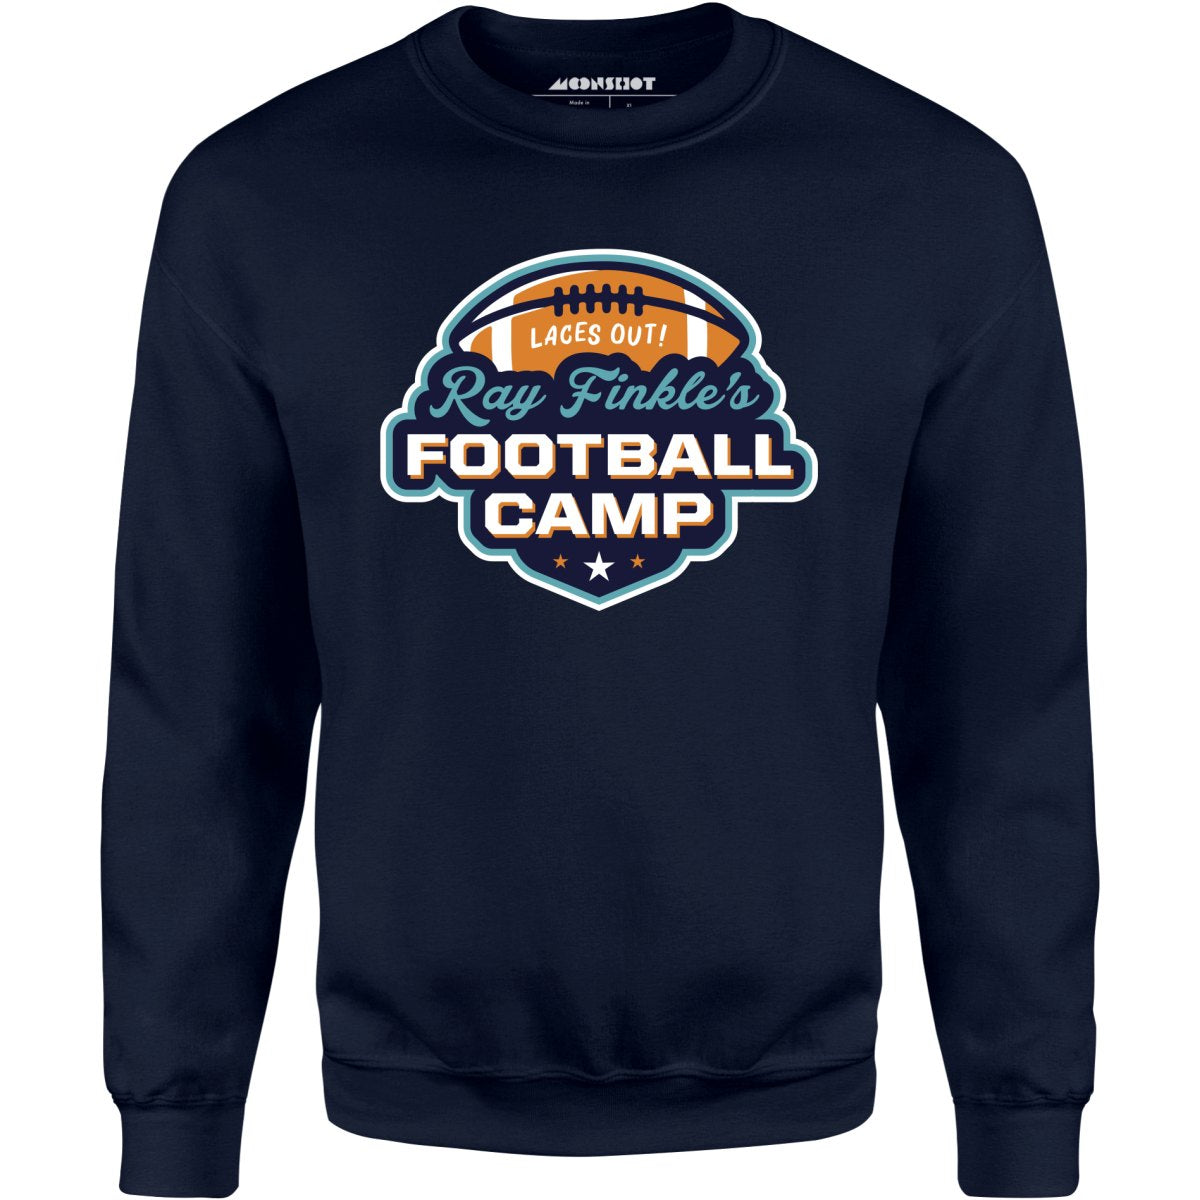 Ray Finkle's Football Camp - Unisex Sweatshirt